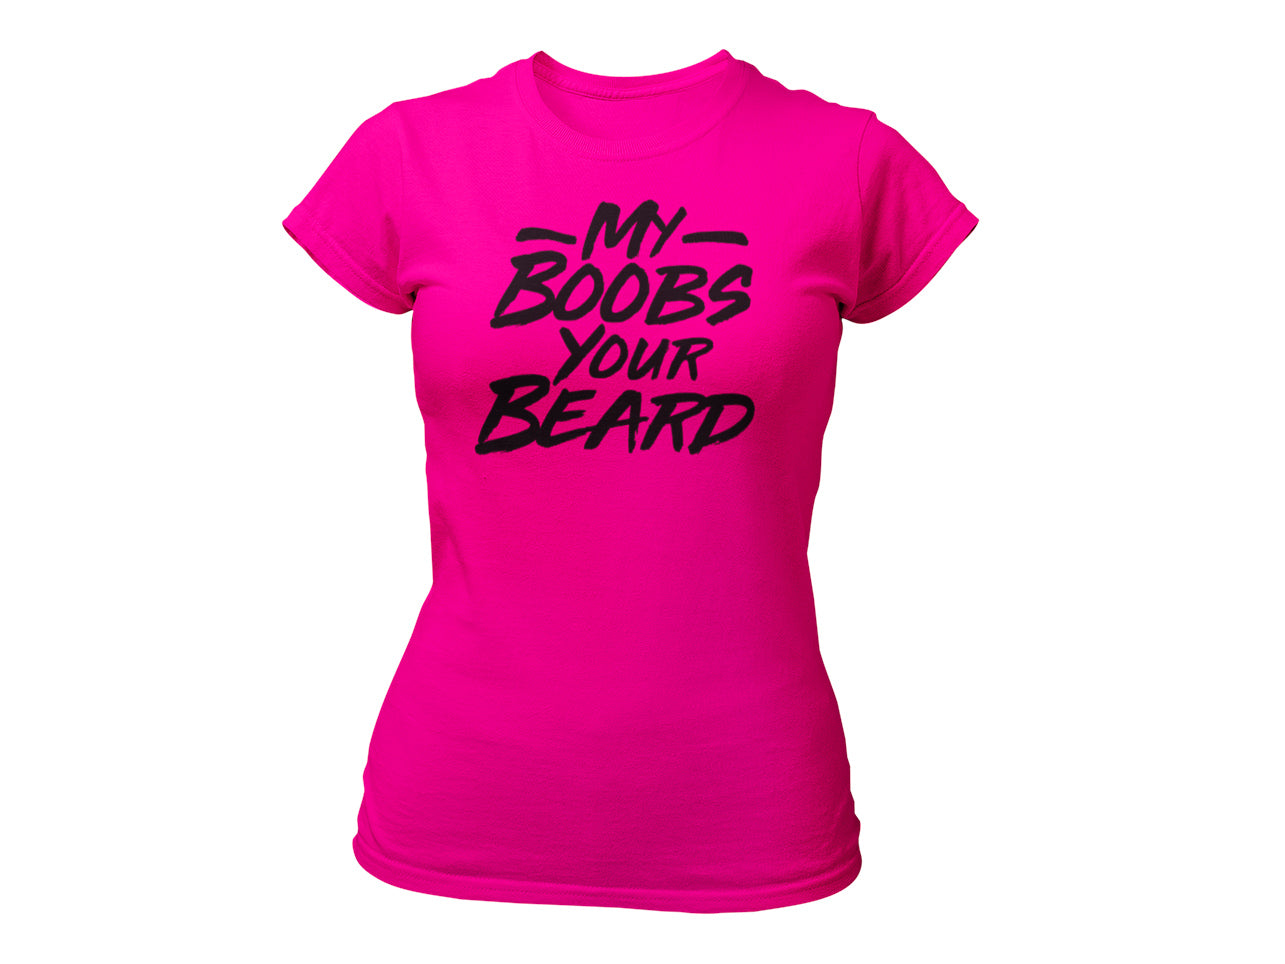 My Boobs Your Beard Short Sleeve T-shirt